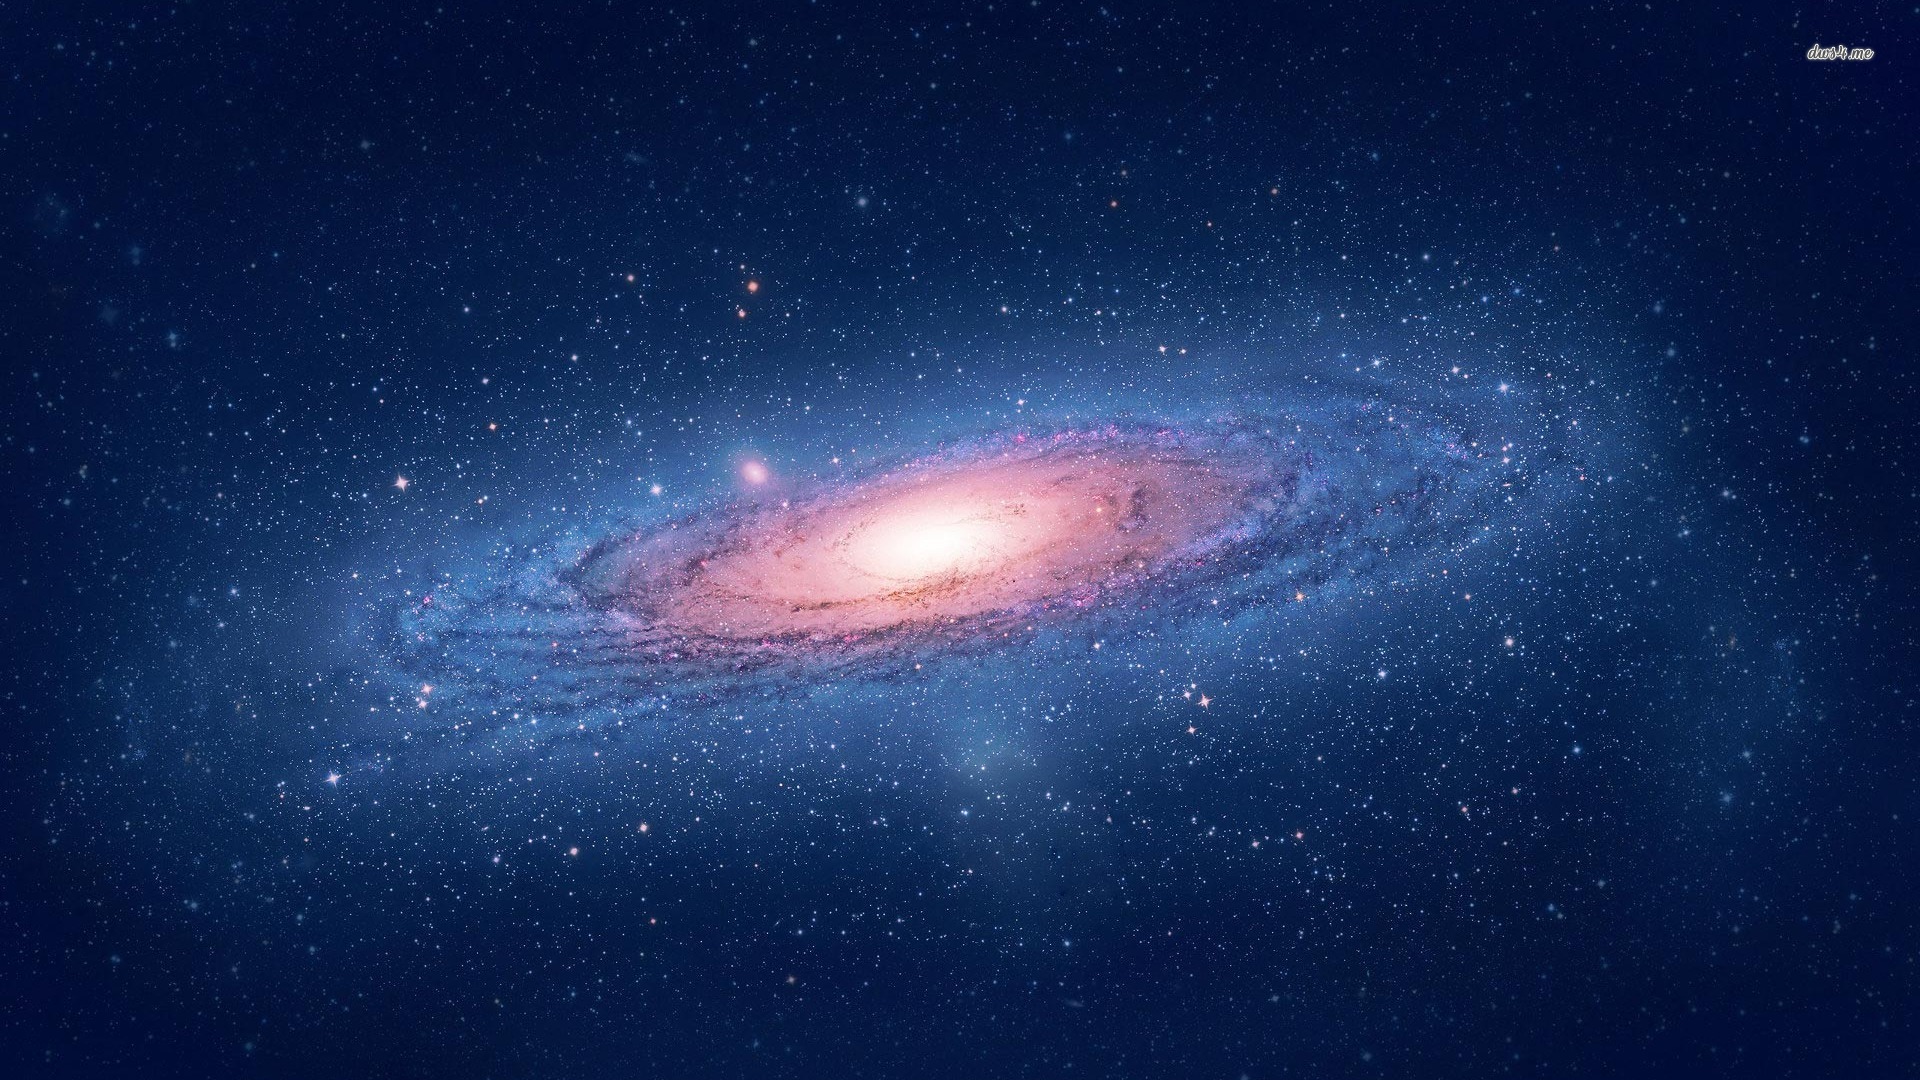 Download NASA Milky Way View Wallpaper | Wallpapers.com